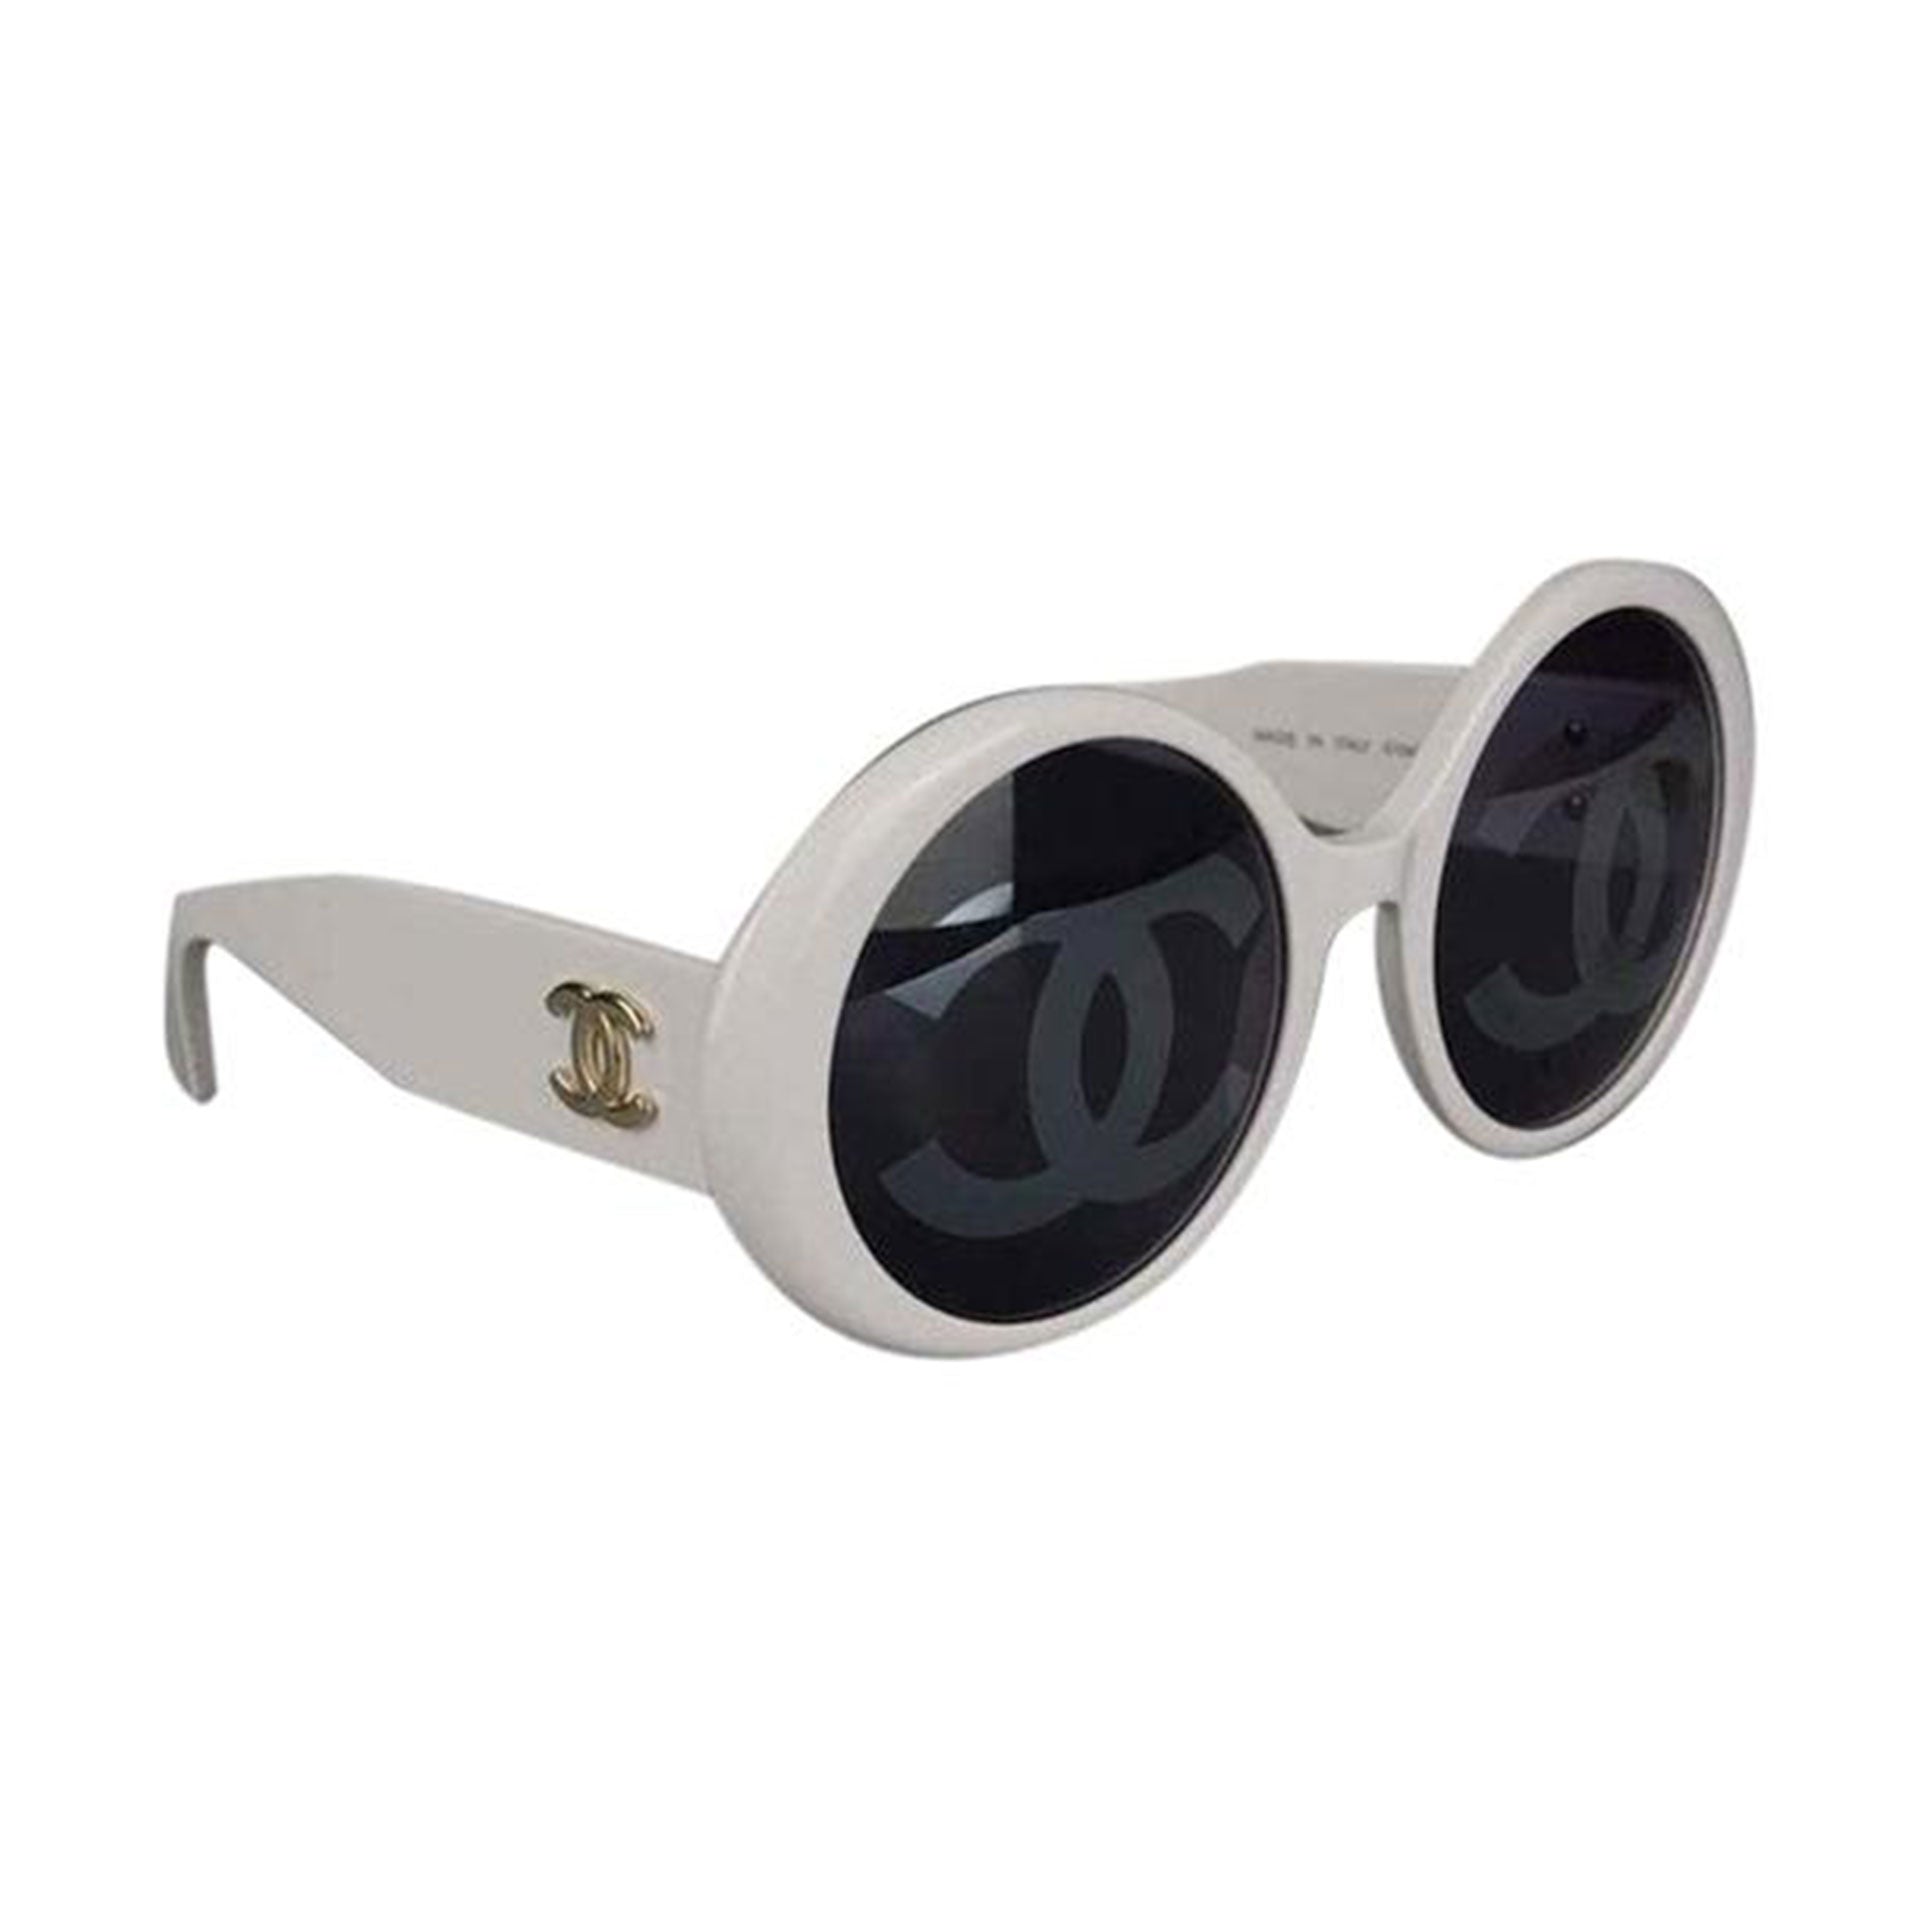 Vintage 1993 Iconic CHANEL Round White Sunglasses 